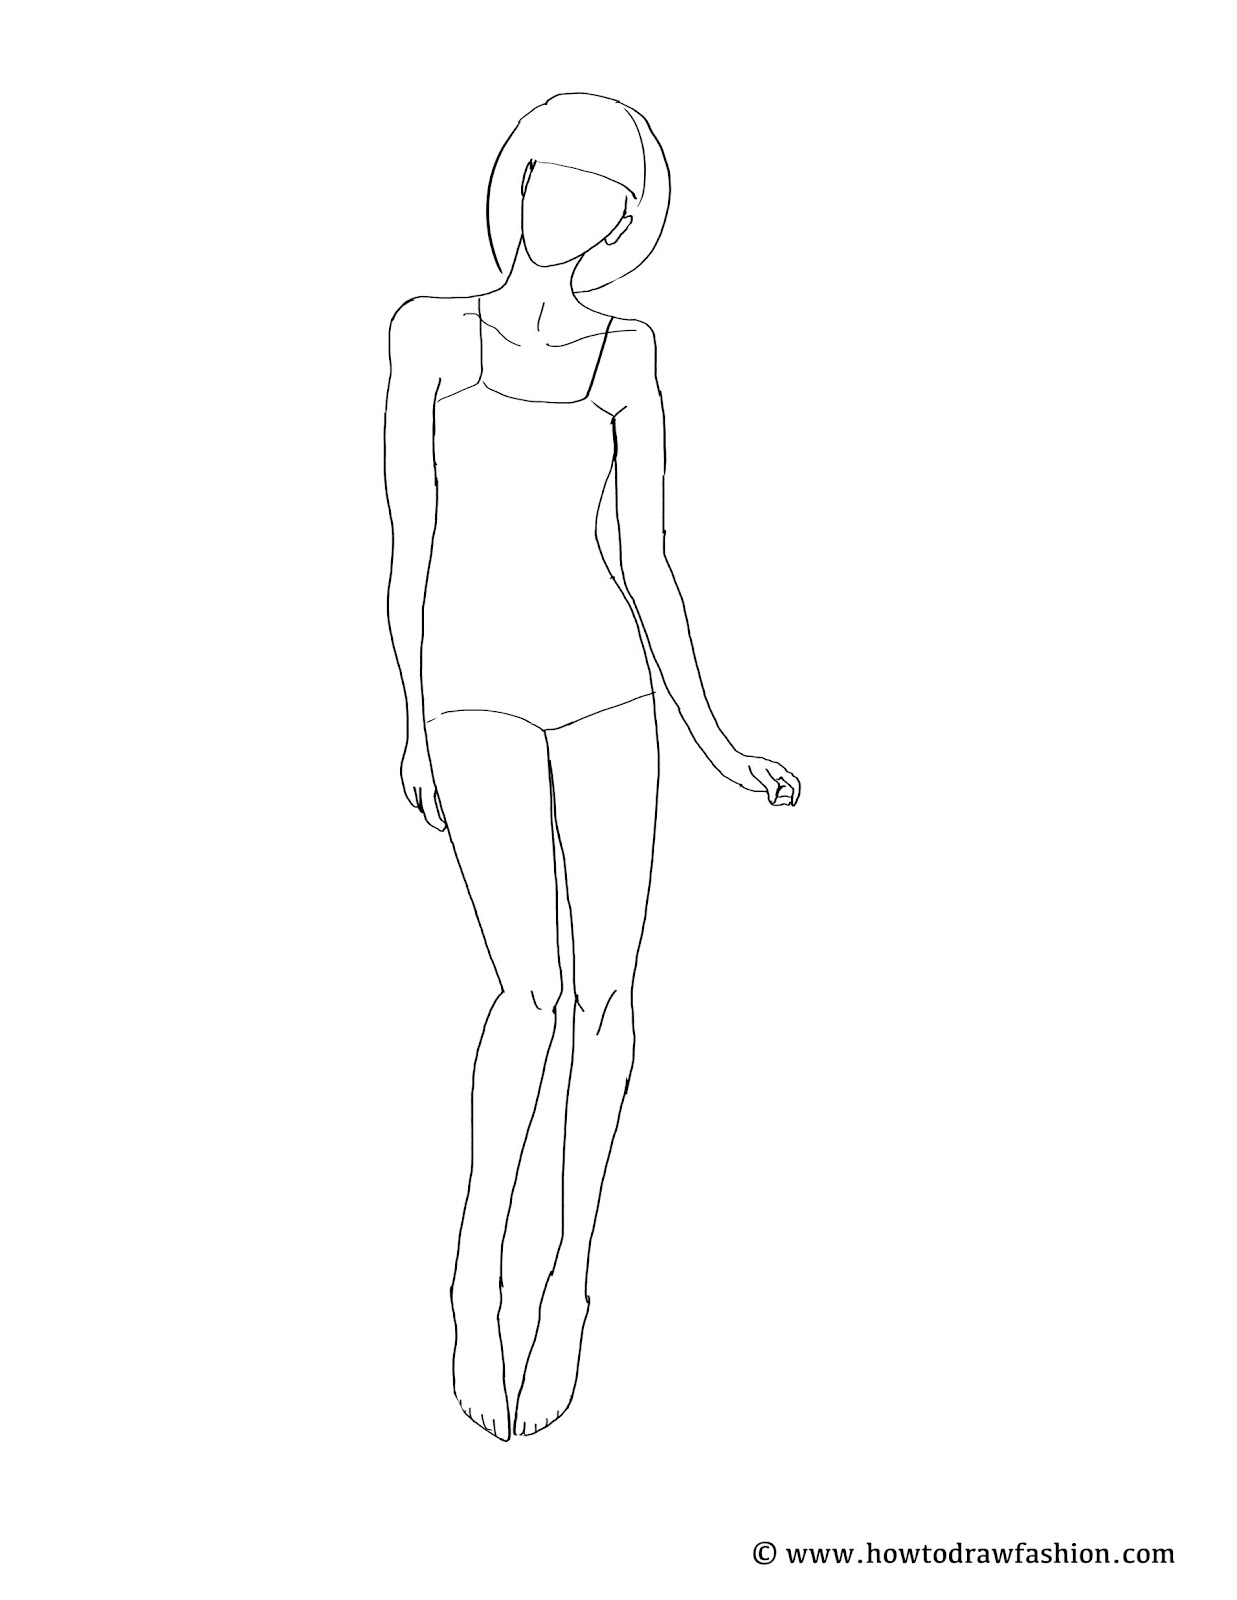 How To Draw A Body Sketch For Fashion Drawlevel